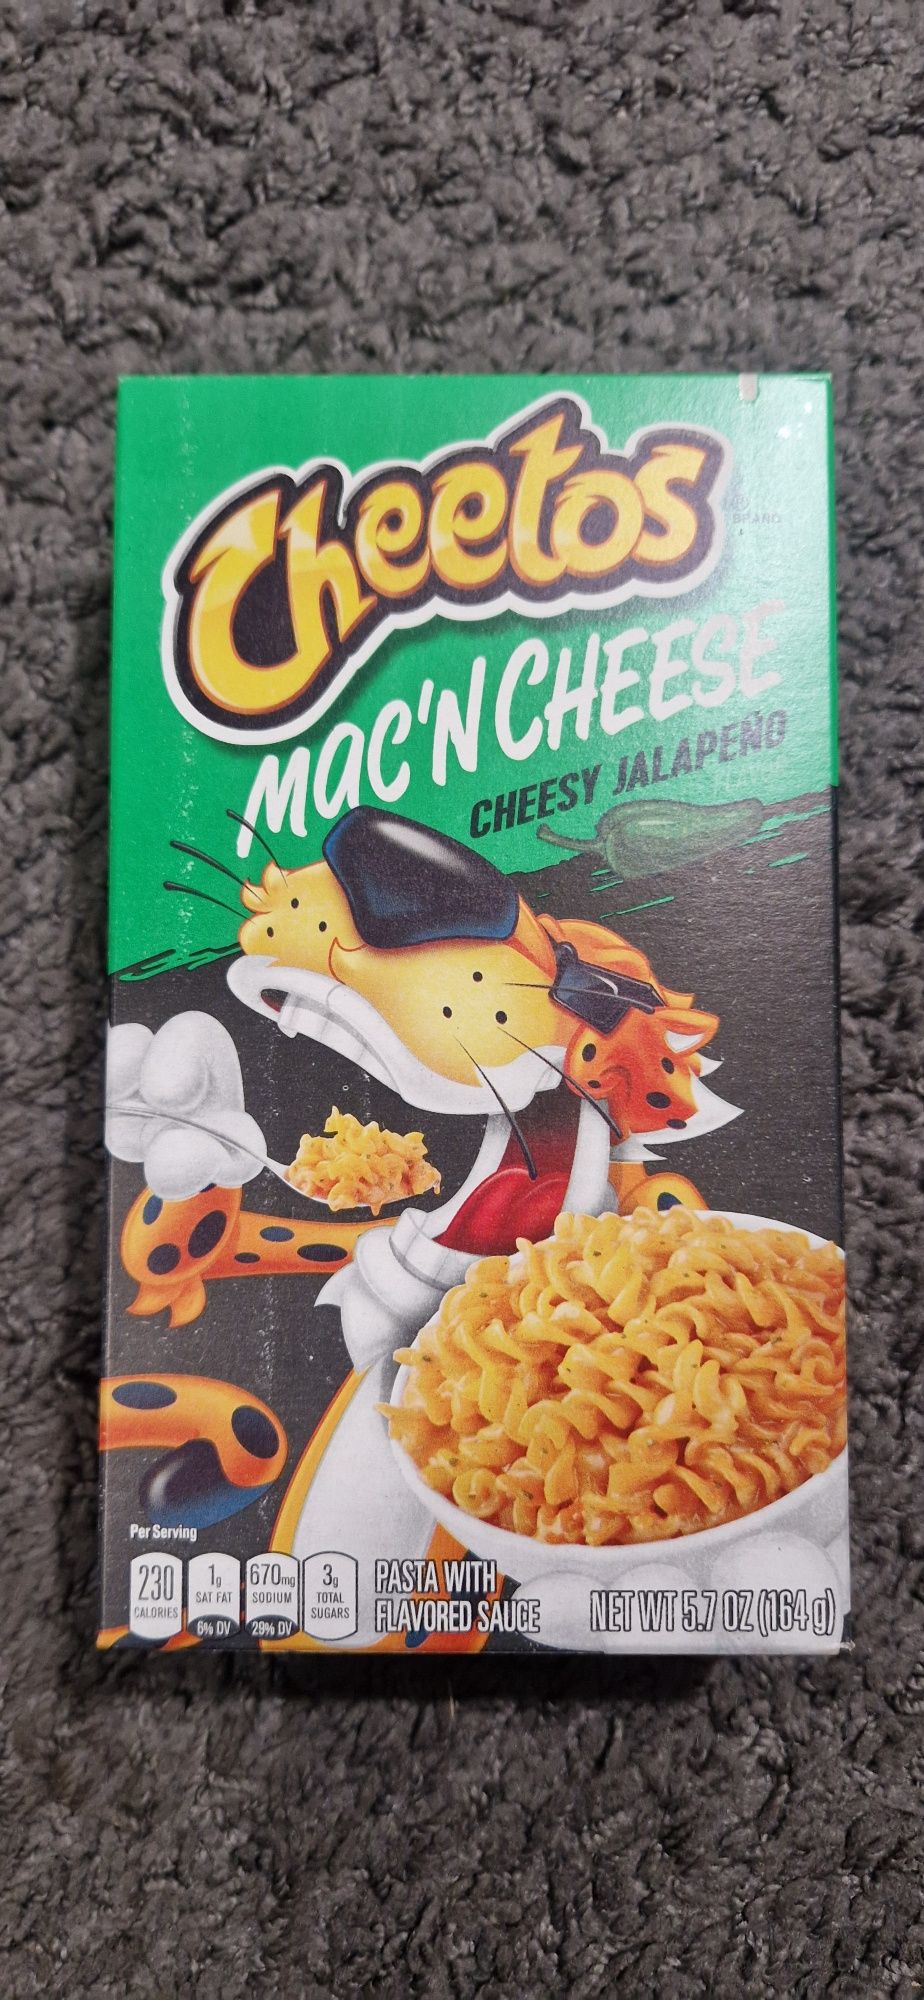 Genialny makaron MAC'N CHEESE Cheetos CHEESY JALAPENO Prosto z USA